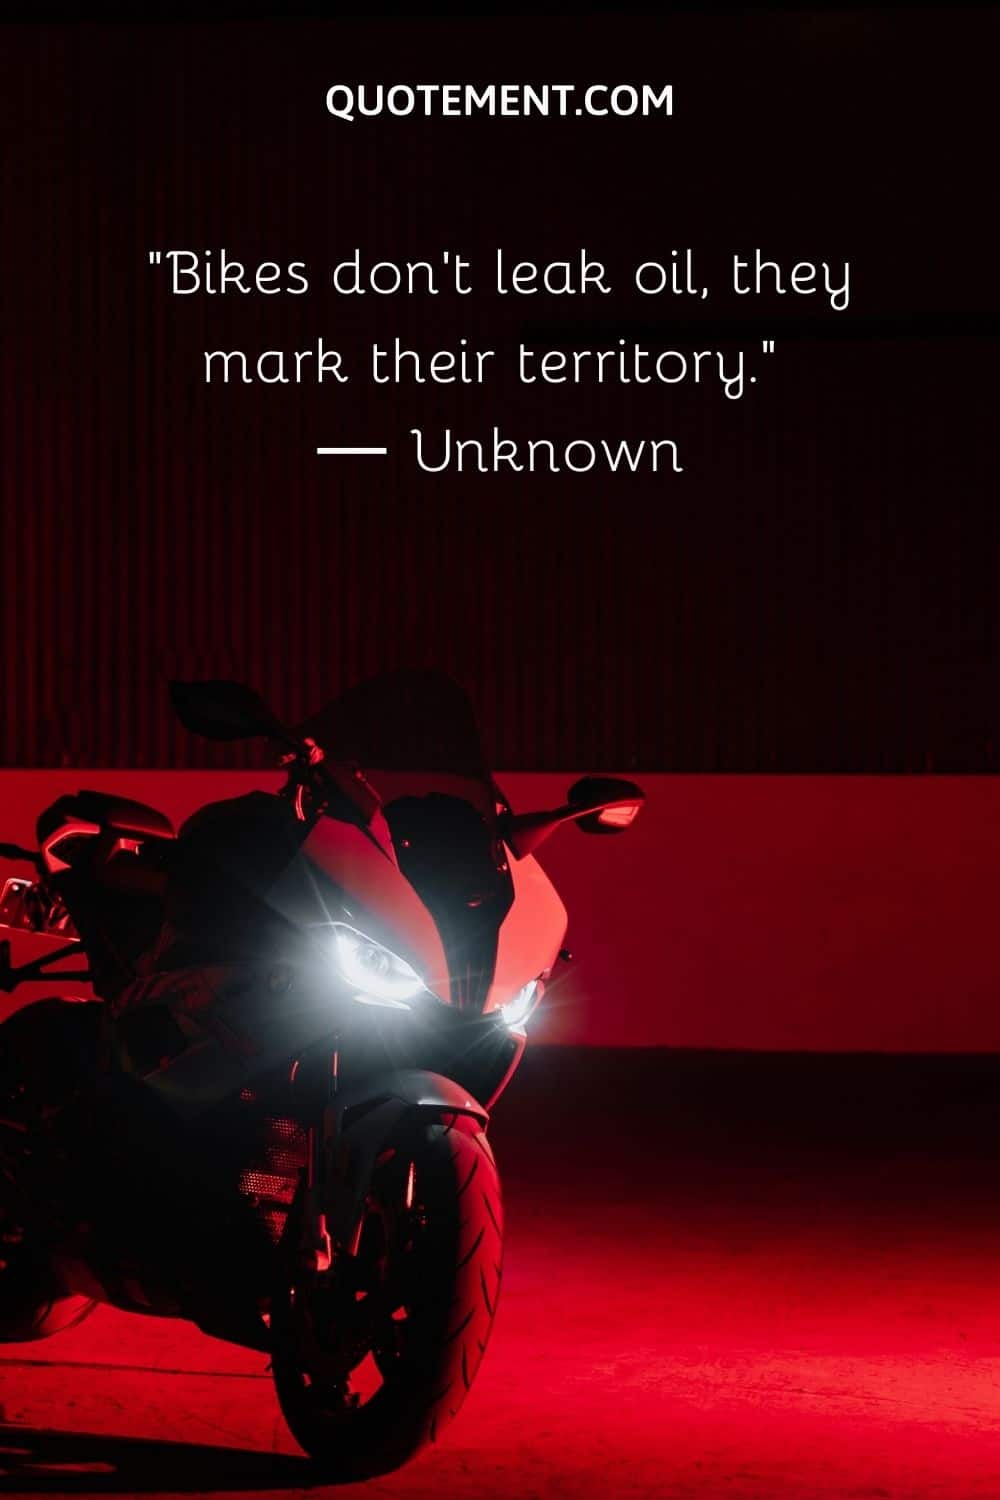 Bikes don’t leak oil, they mark their territory.